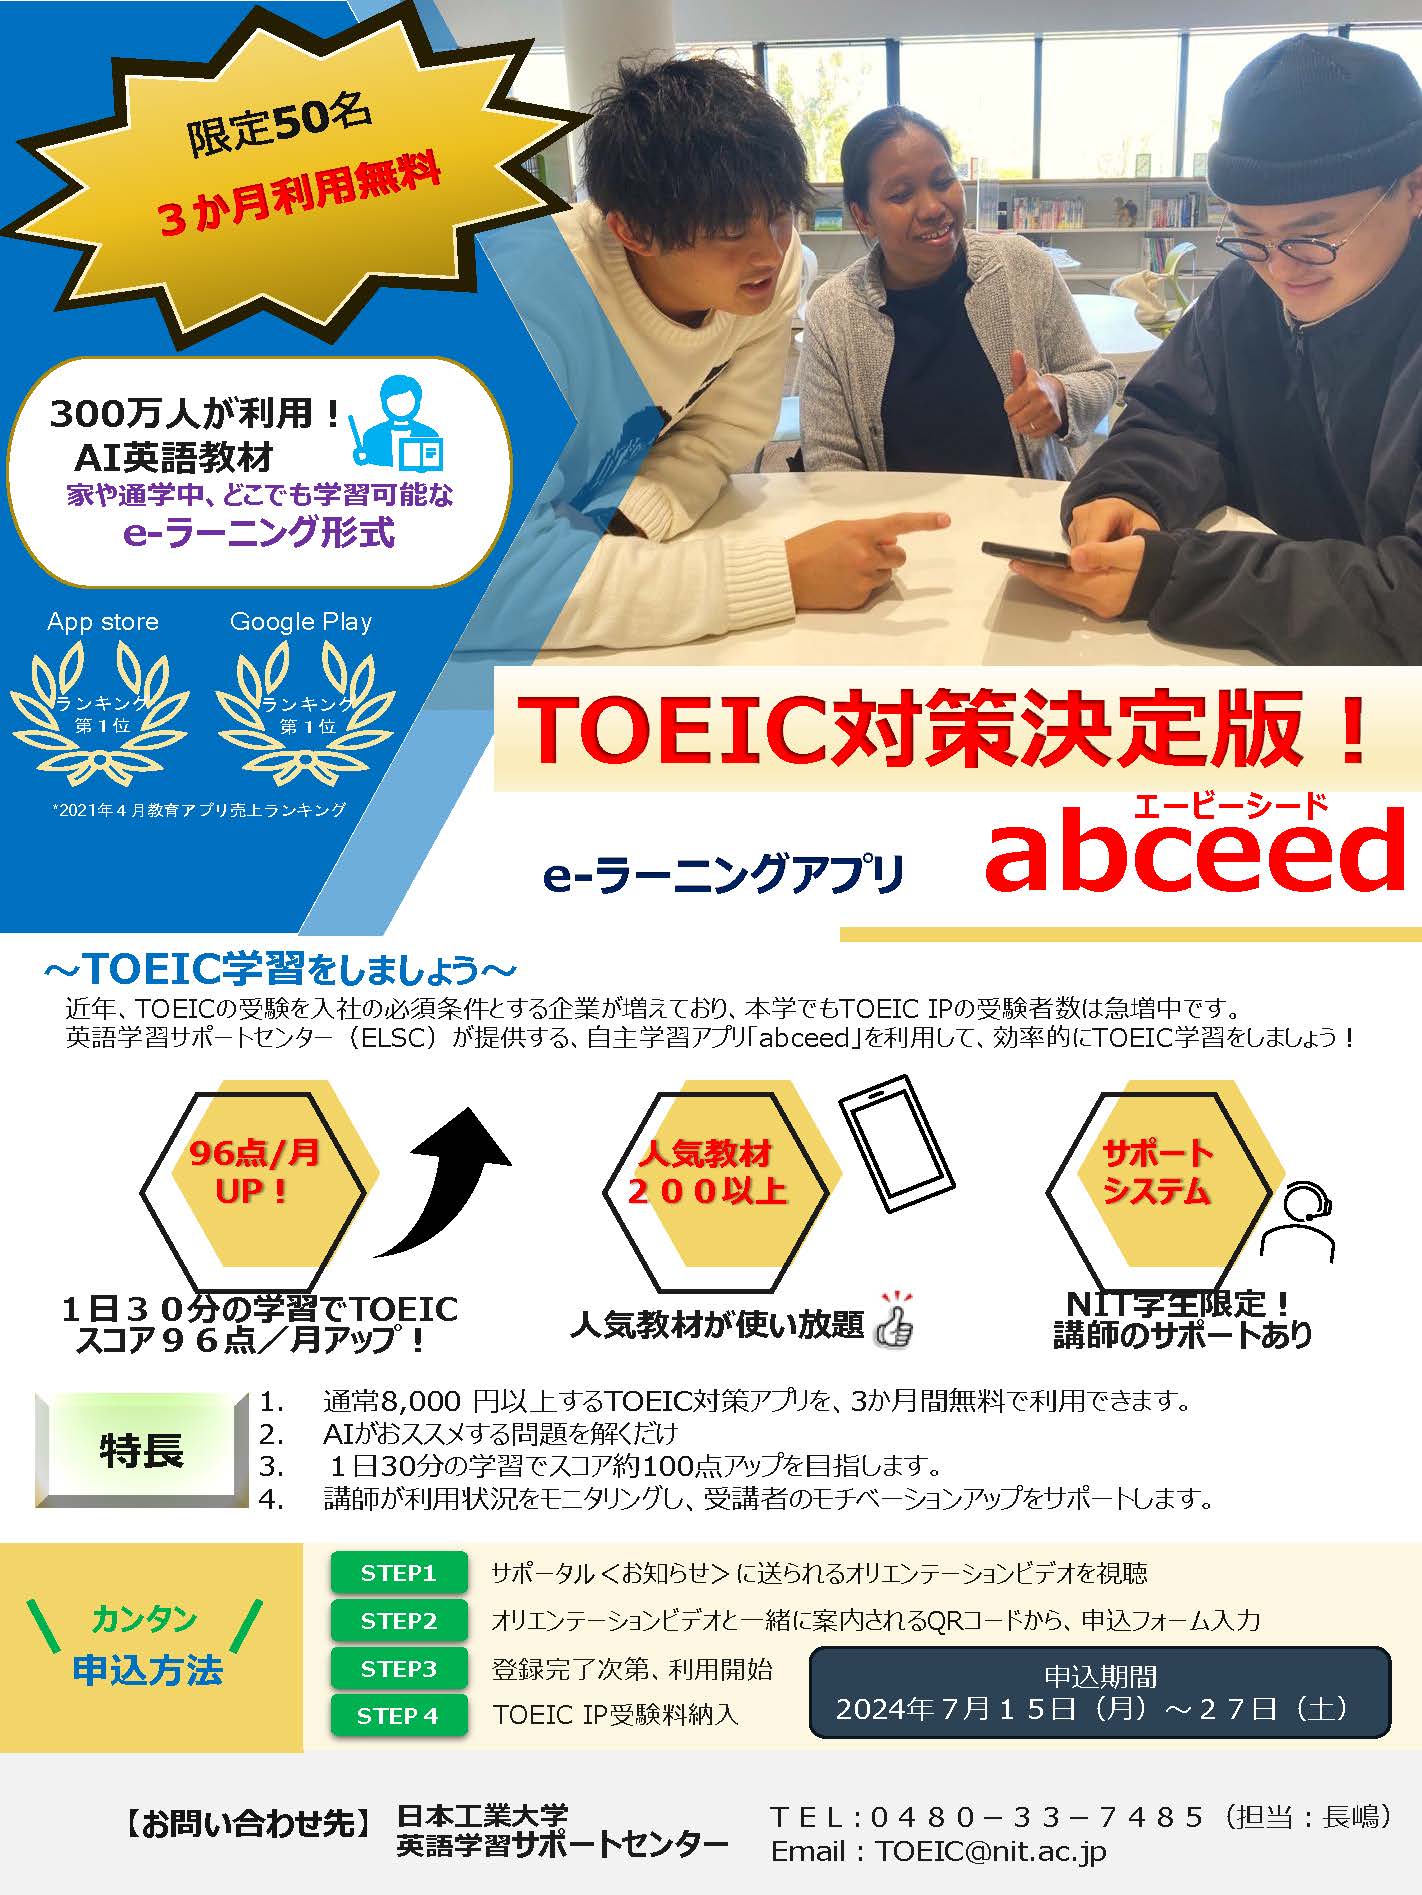 TOEICオンライン自主学習アプリ「abceed（エービーシード）」のご案内